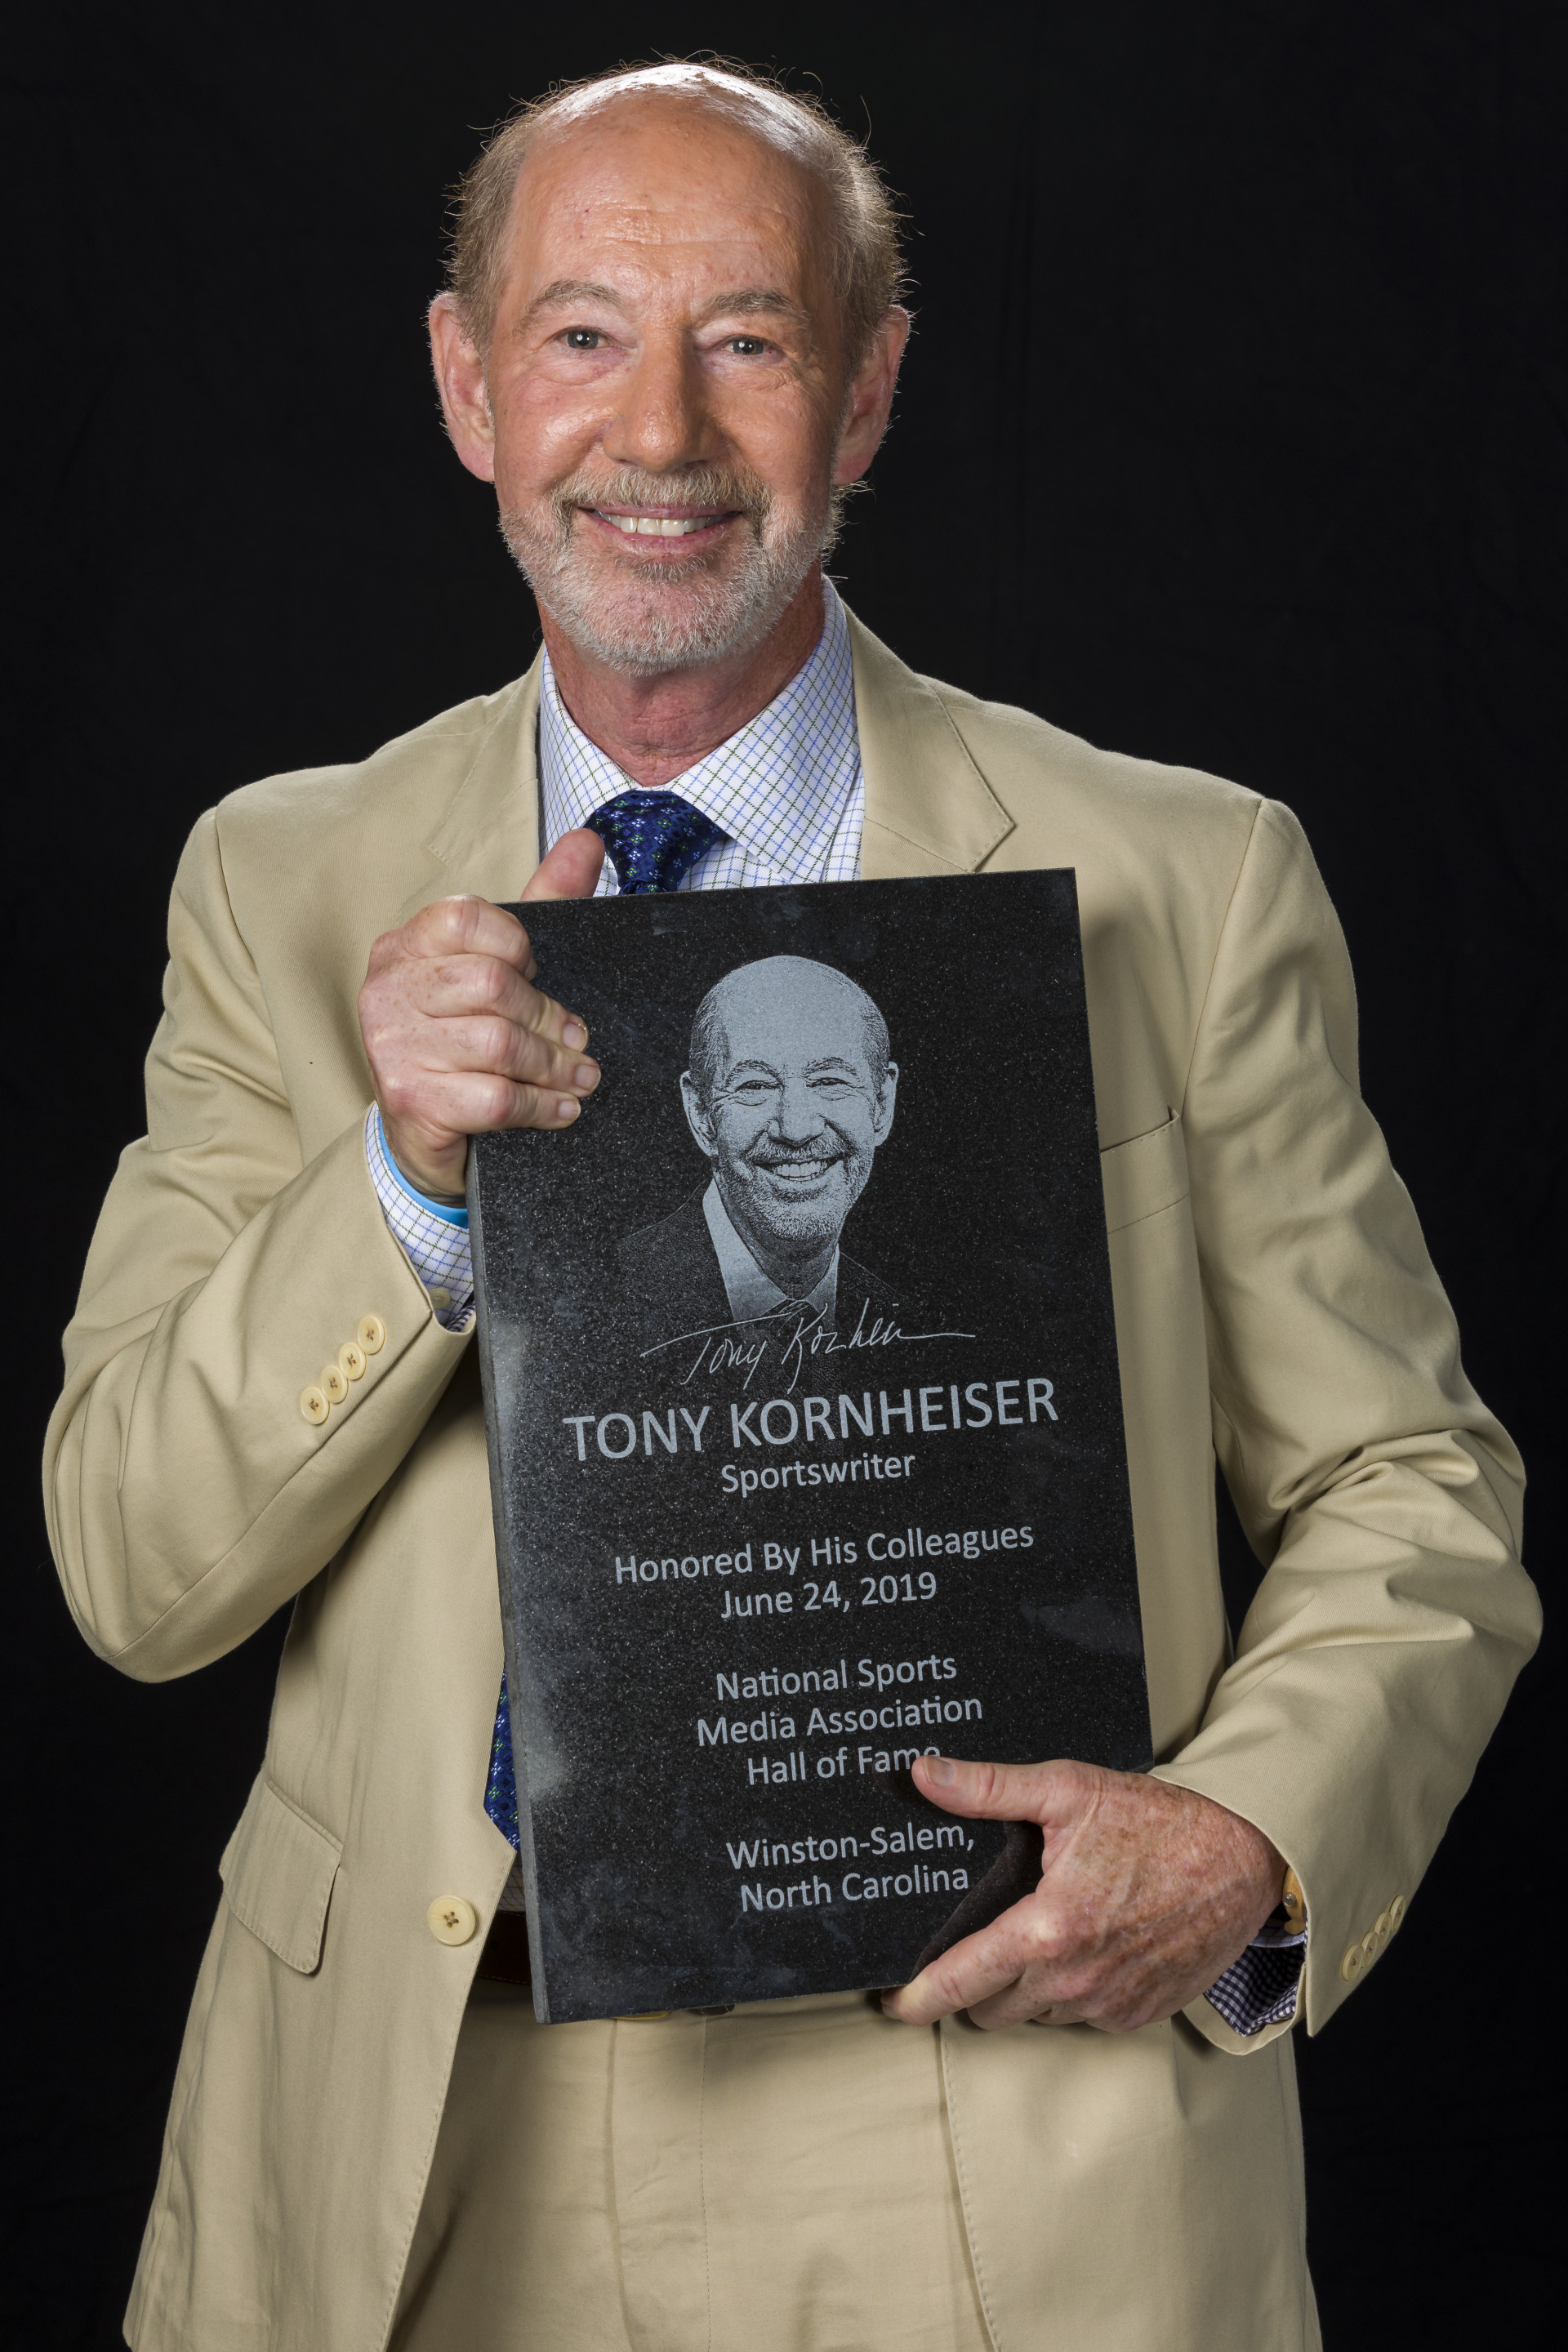 Tony Kornheiser